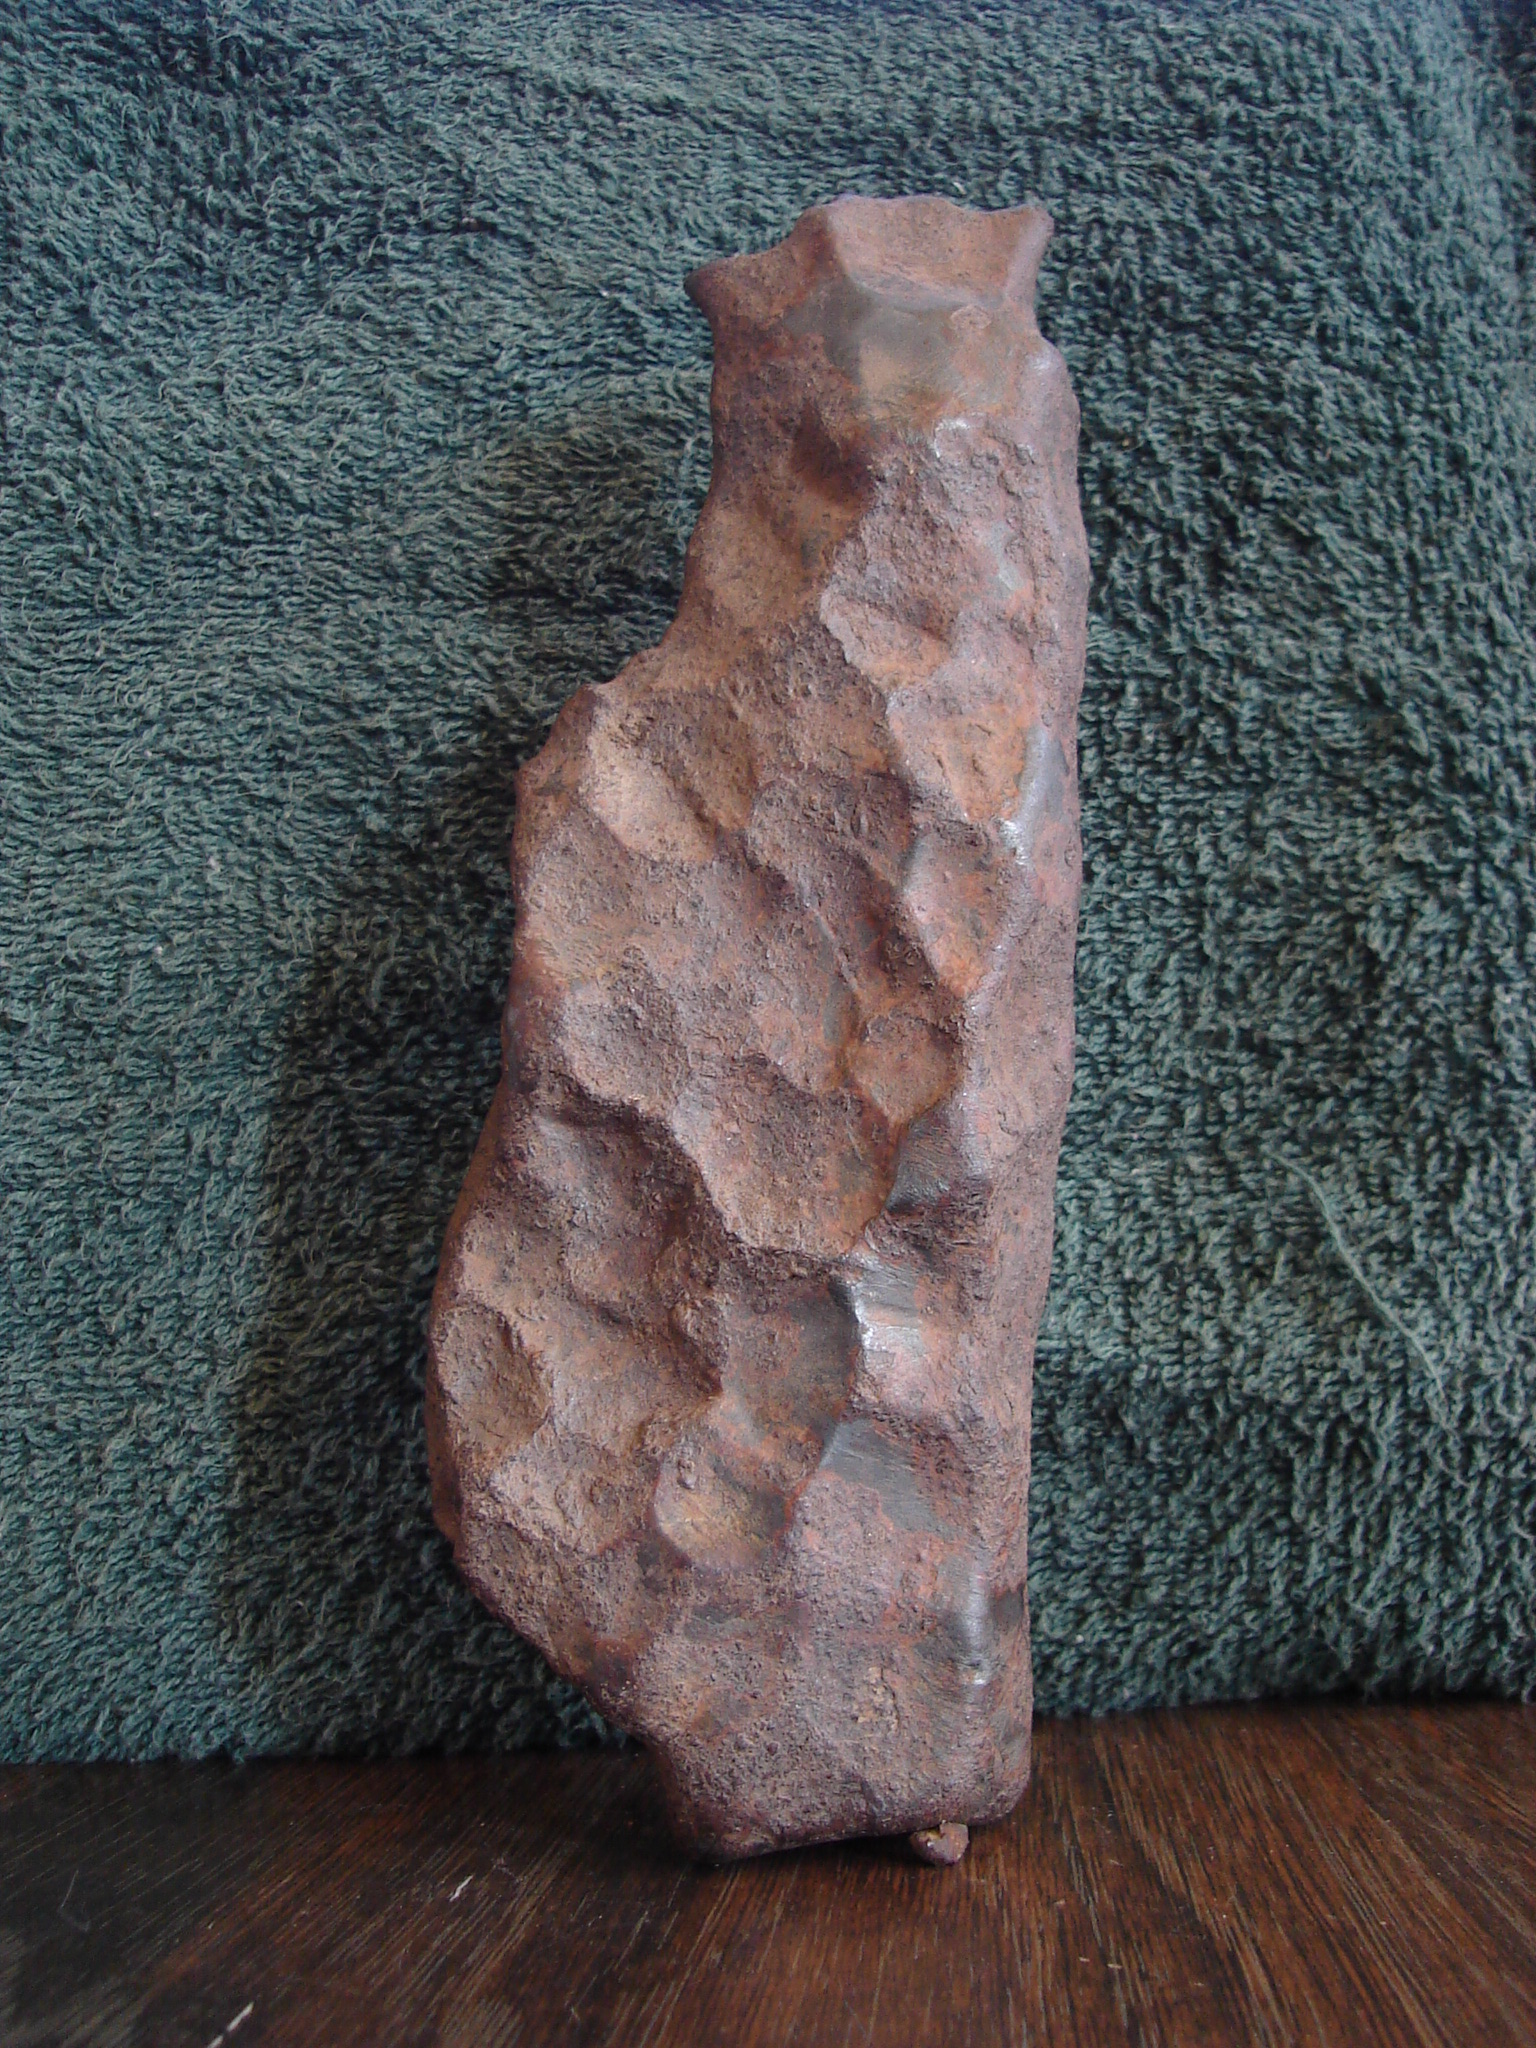 Glorieta Mountain Meteorite showing the regmaglyphs